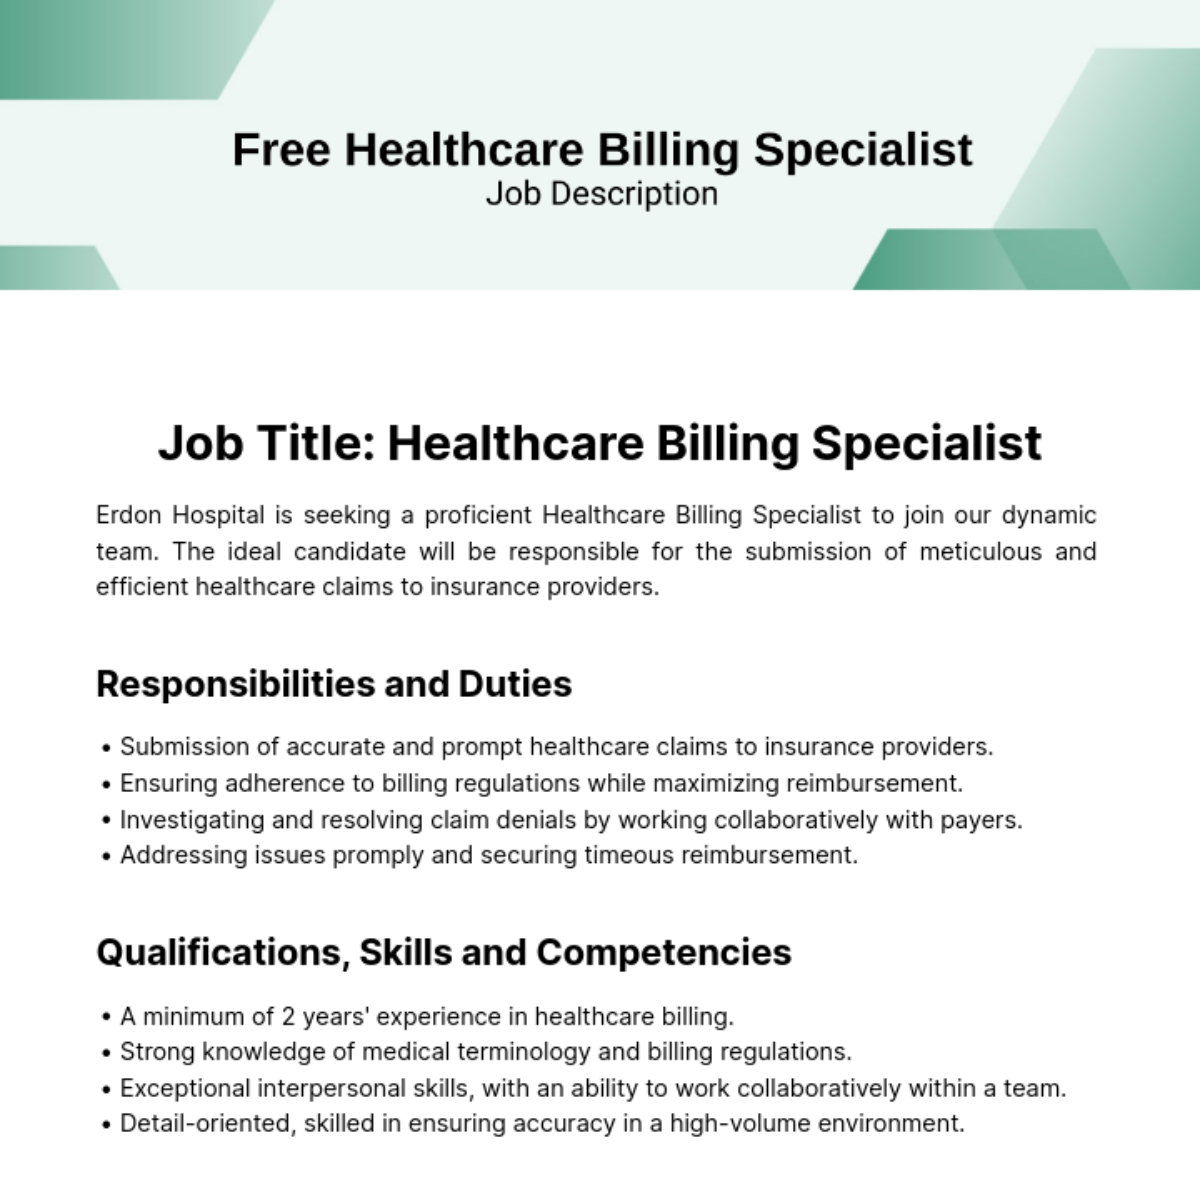 Free Healthcare Billing Specialist Job Description Template